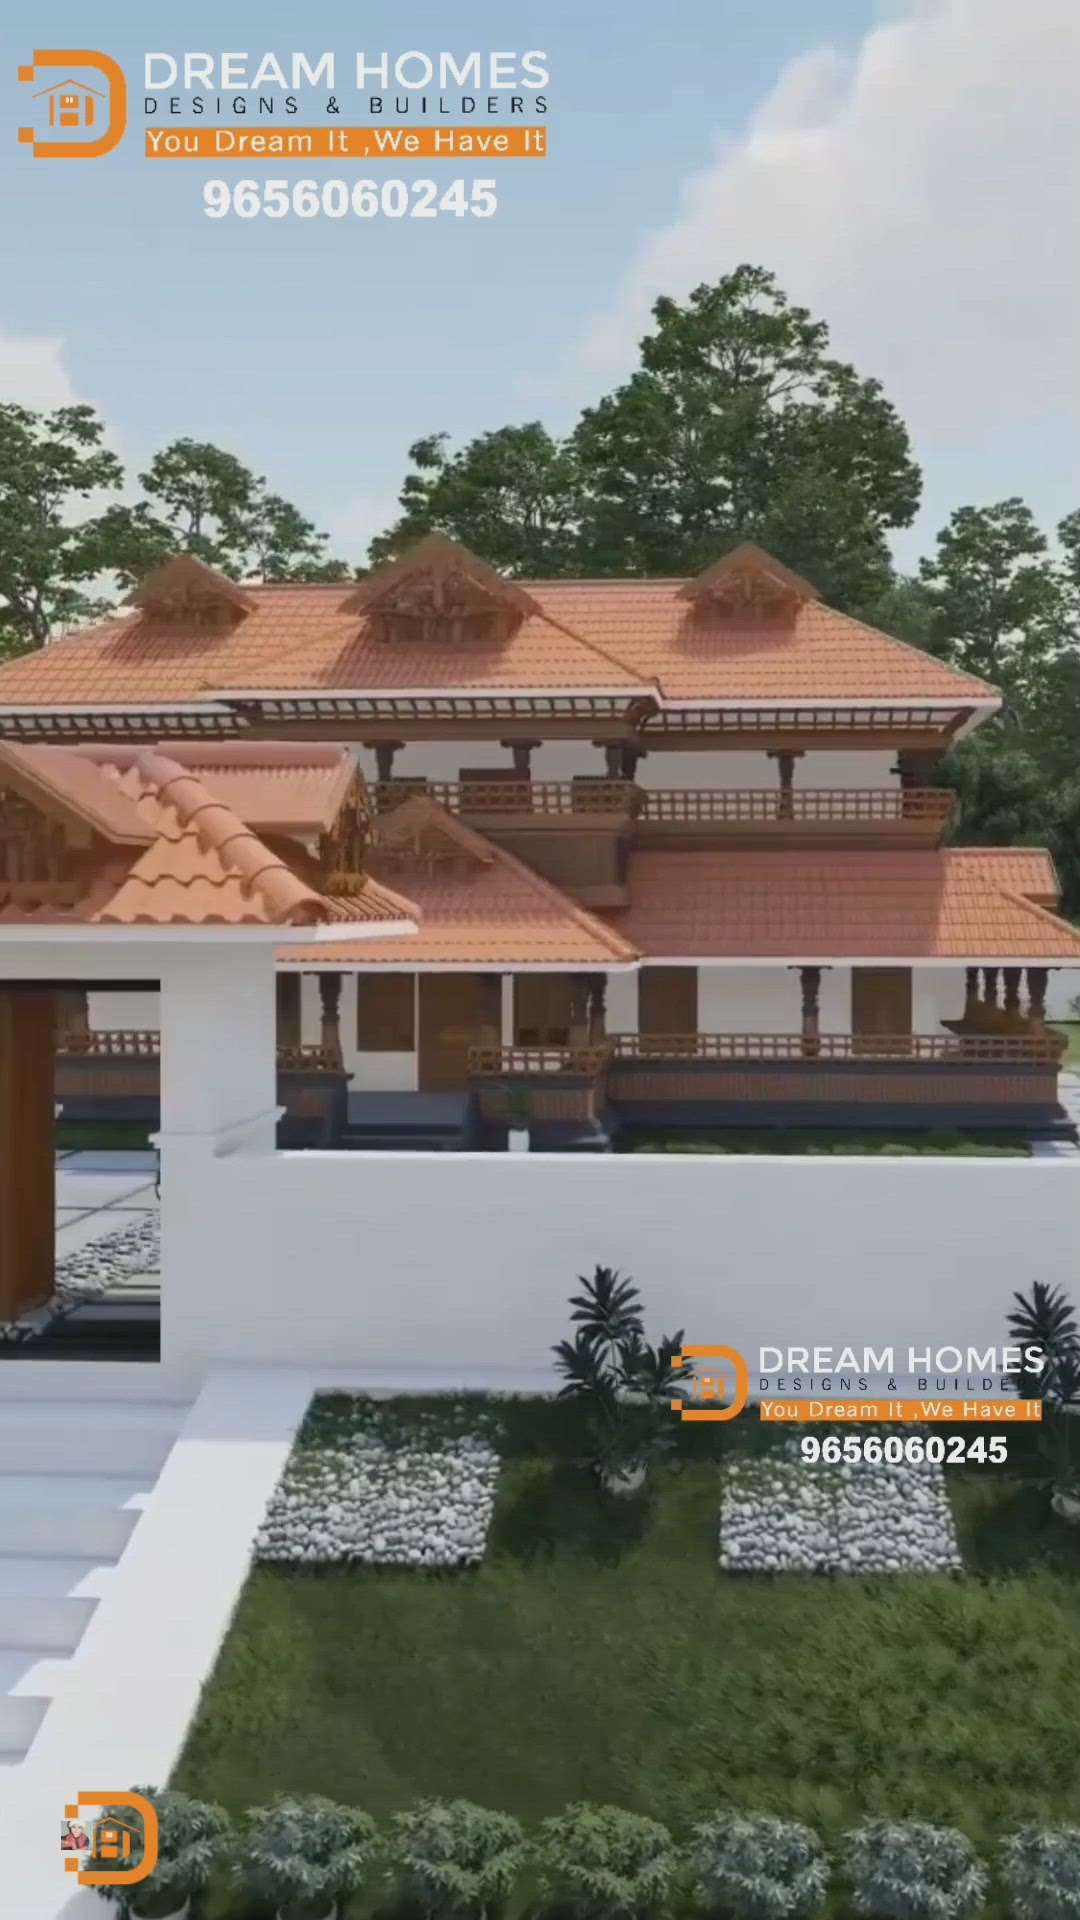 "DREAM HOMES DESIGNS & BUILDERS "
            You Dream It, We Have It'

       "Kerala's No 1 Architect for Traditional Homes"
"👇5000 സ്‌ക്വയർ ഫീറ്റ് വിസ്ത്രീതിയിൽ കണ്ണൂർ ജില്ലയിൽ ഇരിക്കുറിൽ തുടങ്ങുവാനിരിക്കുന്ന പ്രൊജക്റ്റ്‌ 👇"കണ്ണുരും കോഴിക്കോടും ആയി 4 പ്രൊജക്റ്റ്‌സ് സൈറ്റ് വിസിറ്റിങ് 🙏ഇപ്പോൾ തുടങ്ങുന്നു യാത്ര 🙏
നാളെ കണ്ണൂരിൽ. കേരളത്തിന്റെ വടക്കൻ ജില്ലകളിൽ നിന്നും ഒത്തിരി പേർ കോൺടാക്ട് ചെയ്തിരുന്നു...വീടിന്റ വർക്കുമായി ബന്ധപെട്ടു നേരിൽ കണ്ട് സംസാരിക്കണം പ്ലോട്ട് വിസിറ്റ് ചെയ്യണമെങ്കിൽ കമന്റ്‌ ചെയ്യുക 🙏
#traditionalhome #traditional

"A beautiful traditional structure  will be completed only with the presence of a good Architect and pure Vasthu Sastra.

Dream Homes will always be there whenever we are needed.

We are providing service to all over India 
No Compromise on Quality, Sincerity & Efficiency.

#traditionalhome #traditional 

www.dreamhomesbuilders.com
For more info
9656060245
7902453187